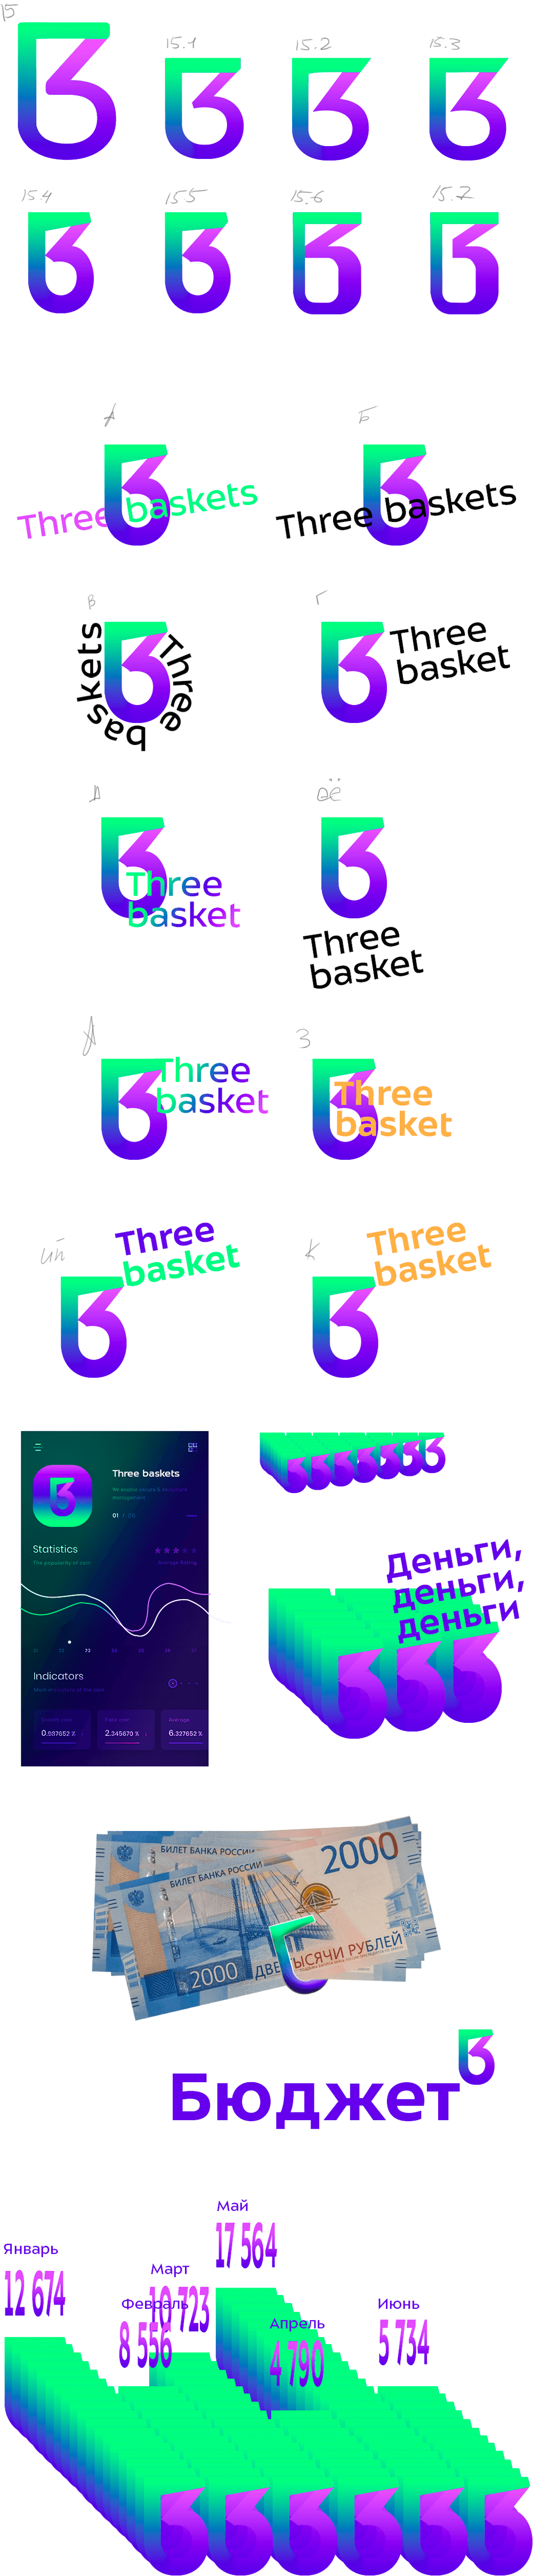 threebaskets process 13